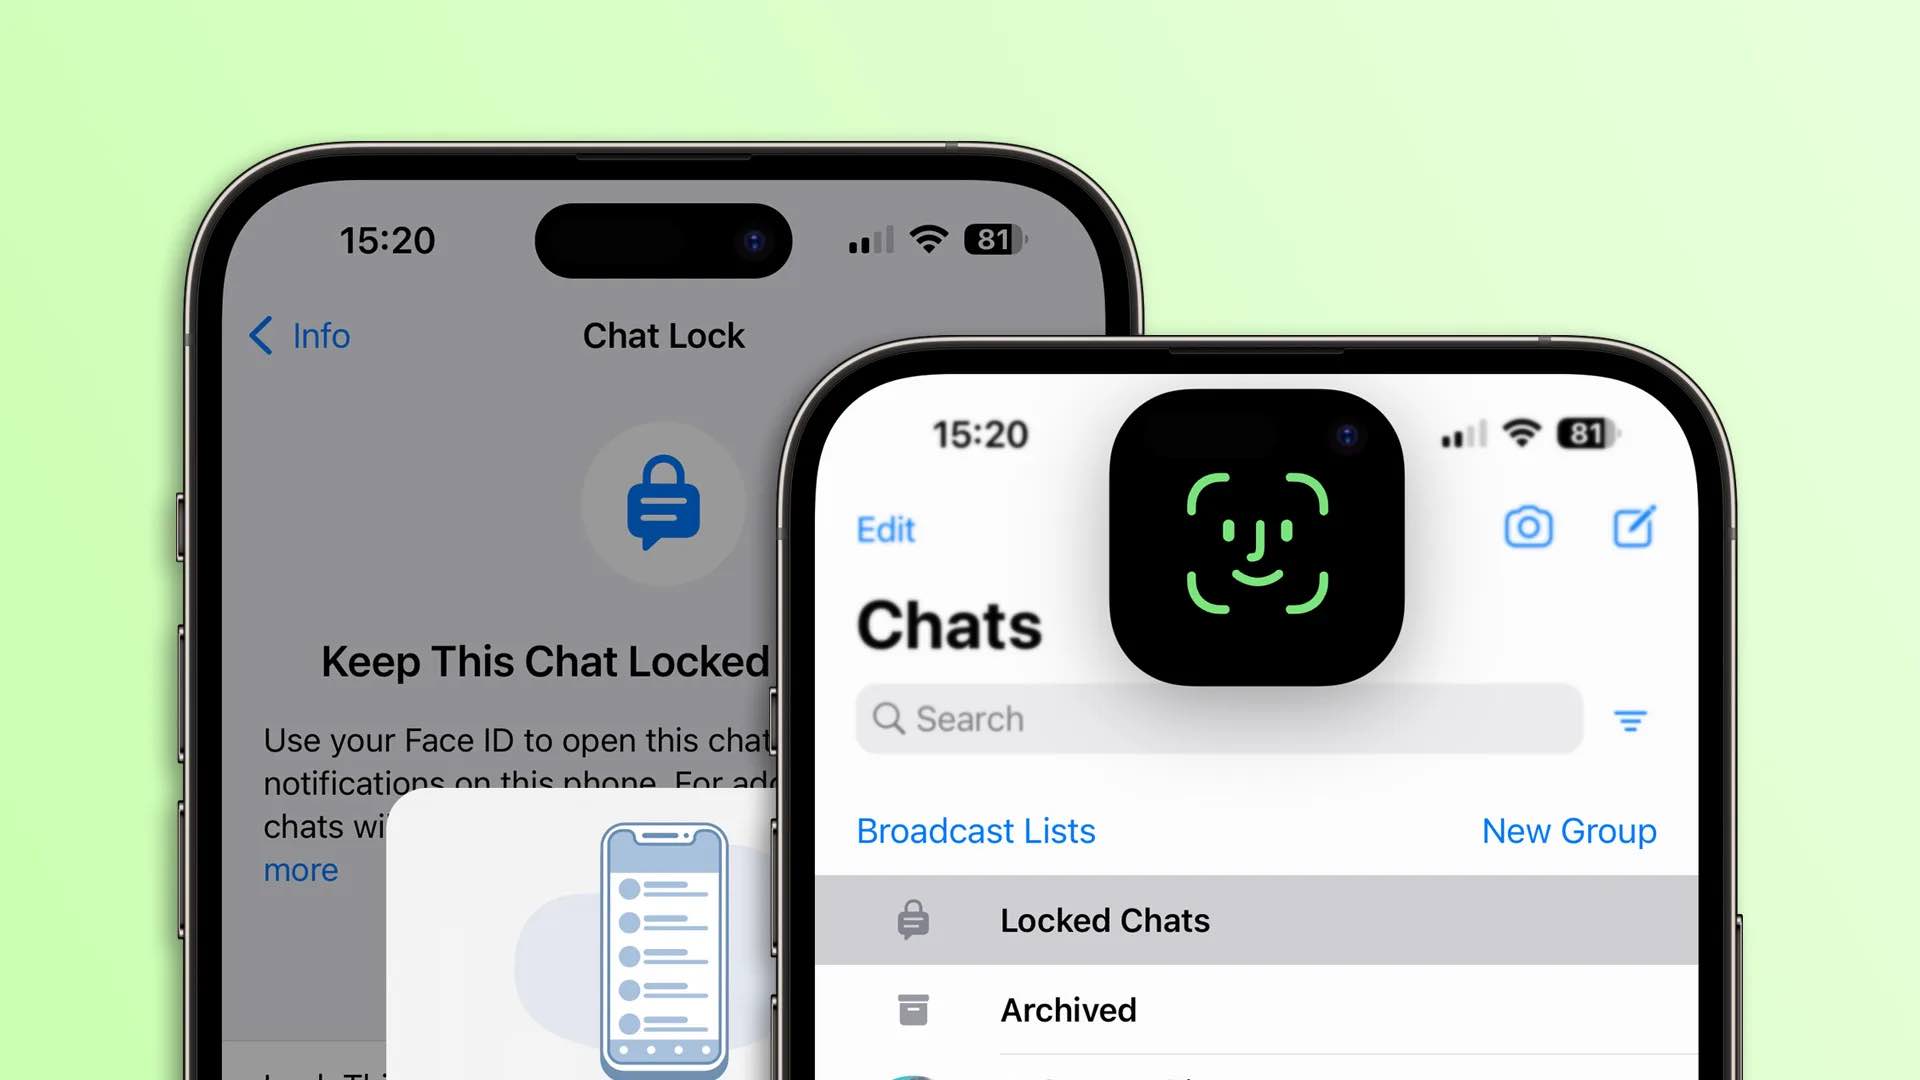 WhatsApp chat lock